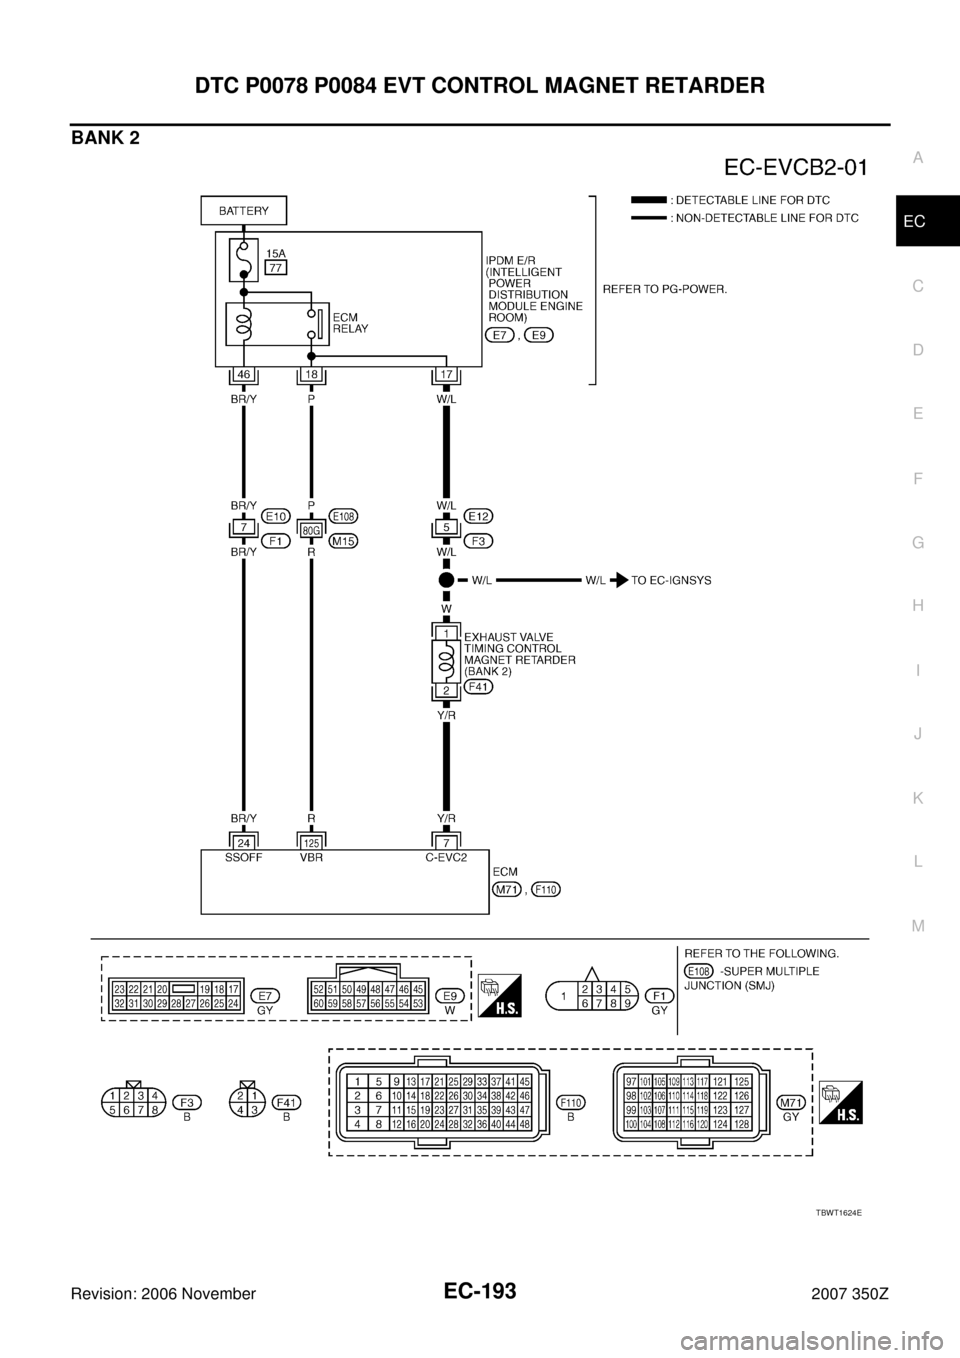 NISSAN 350Z 2007 Z33 Engine Control Service Manual DTC P0078 P0084 EVT CONTROL MAGNET RETARDER
EC-193
C
D
E
F
G
H
I
J
K
L
MA
EC
Revision: 2006 November2007 350Z
BANK 2
TBWT1624E 